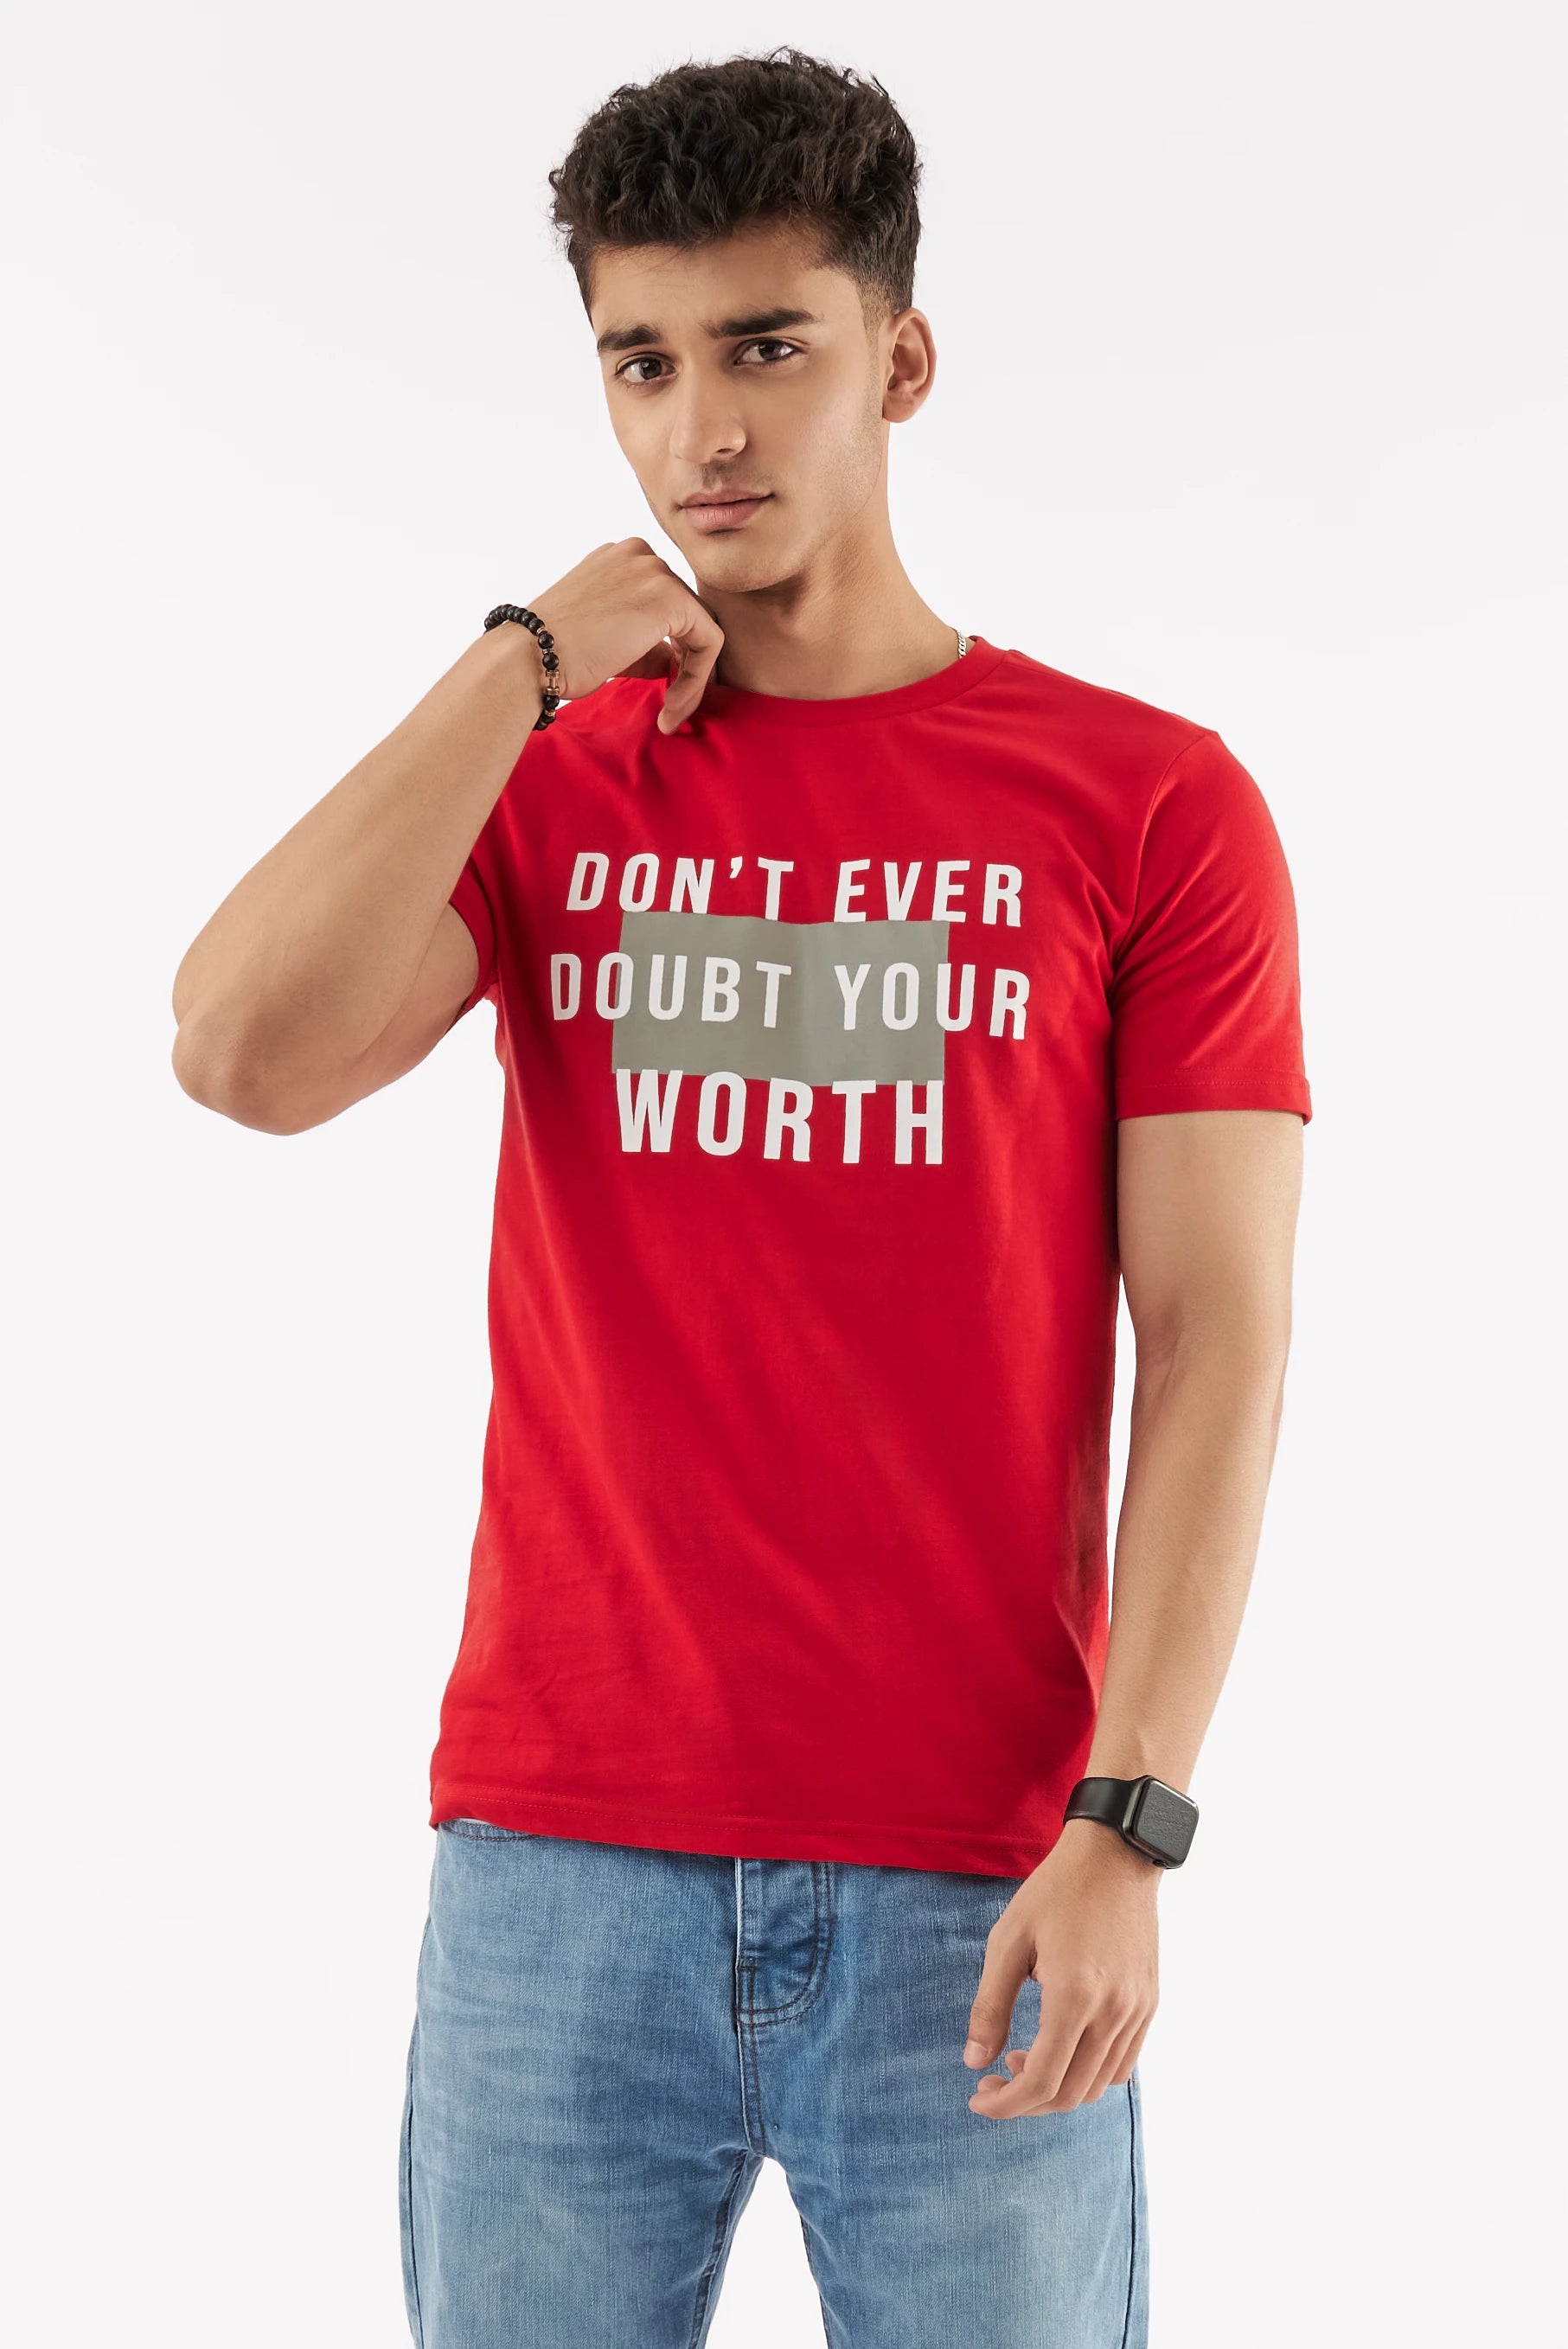 Men's Statement T-Shirt Red